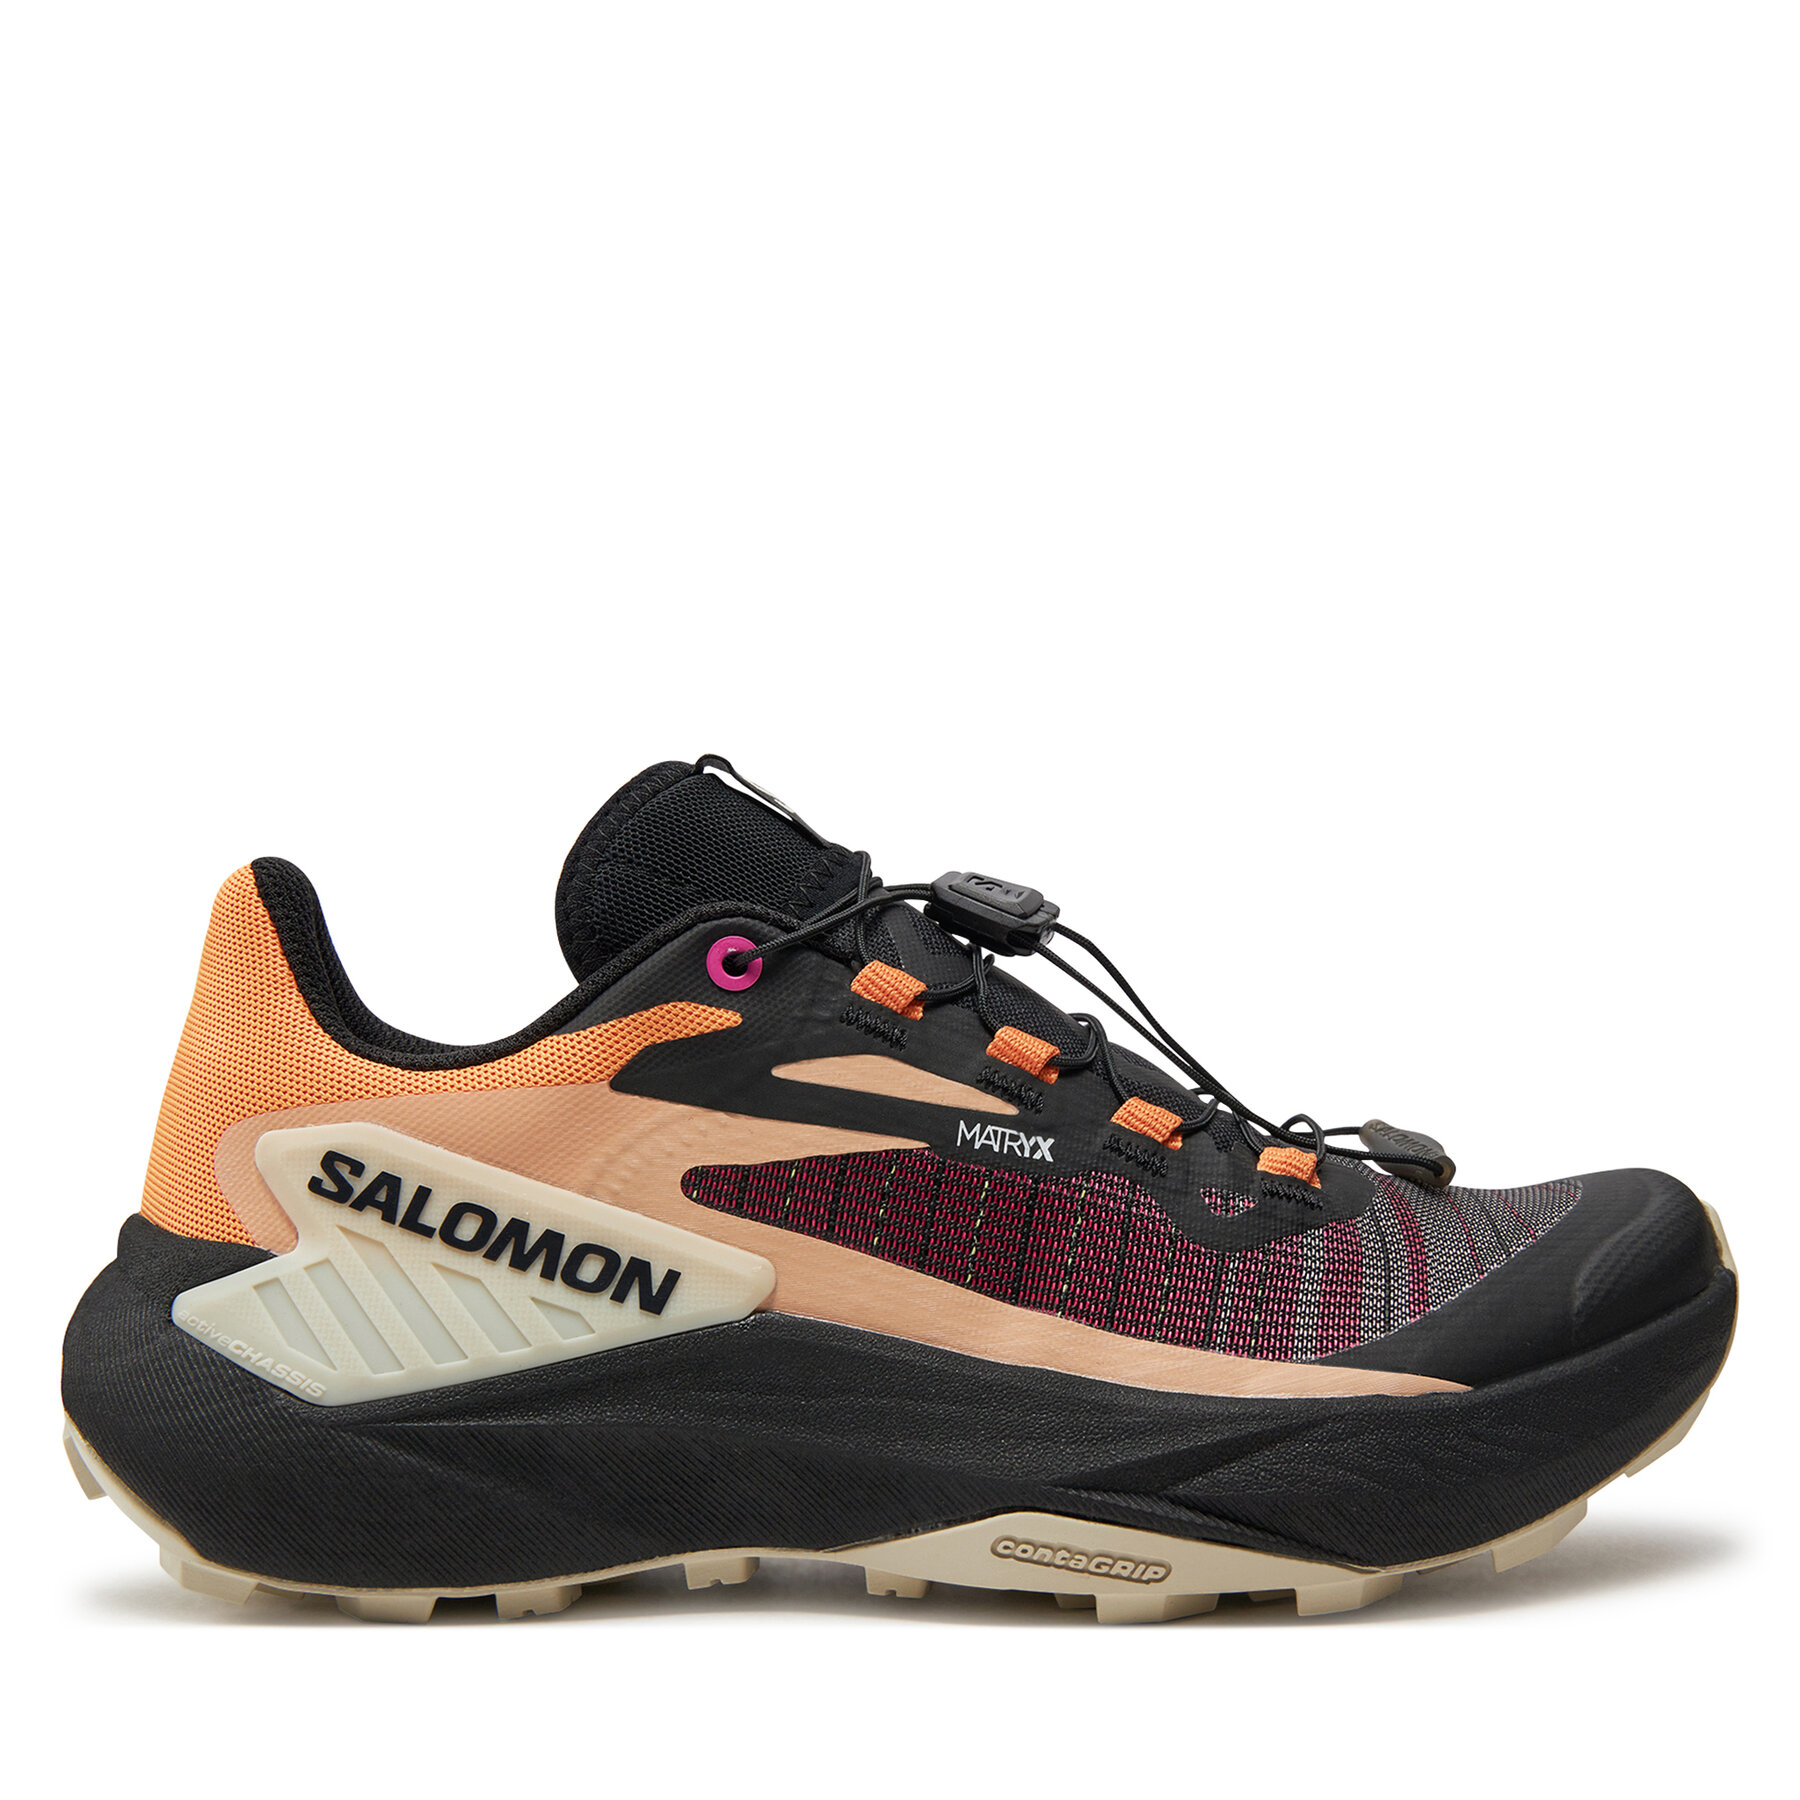 Chaussures de running Salomon Genesis L47444400 Noir